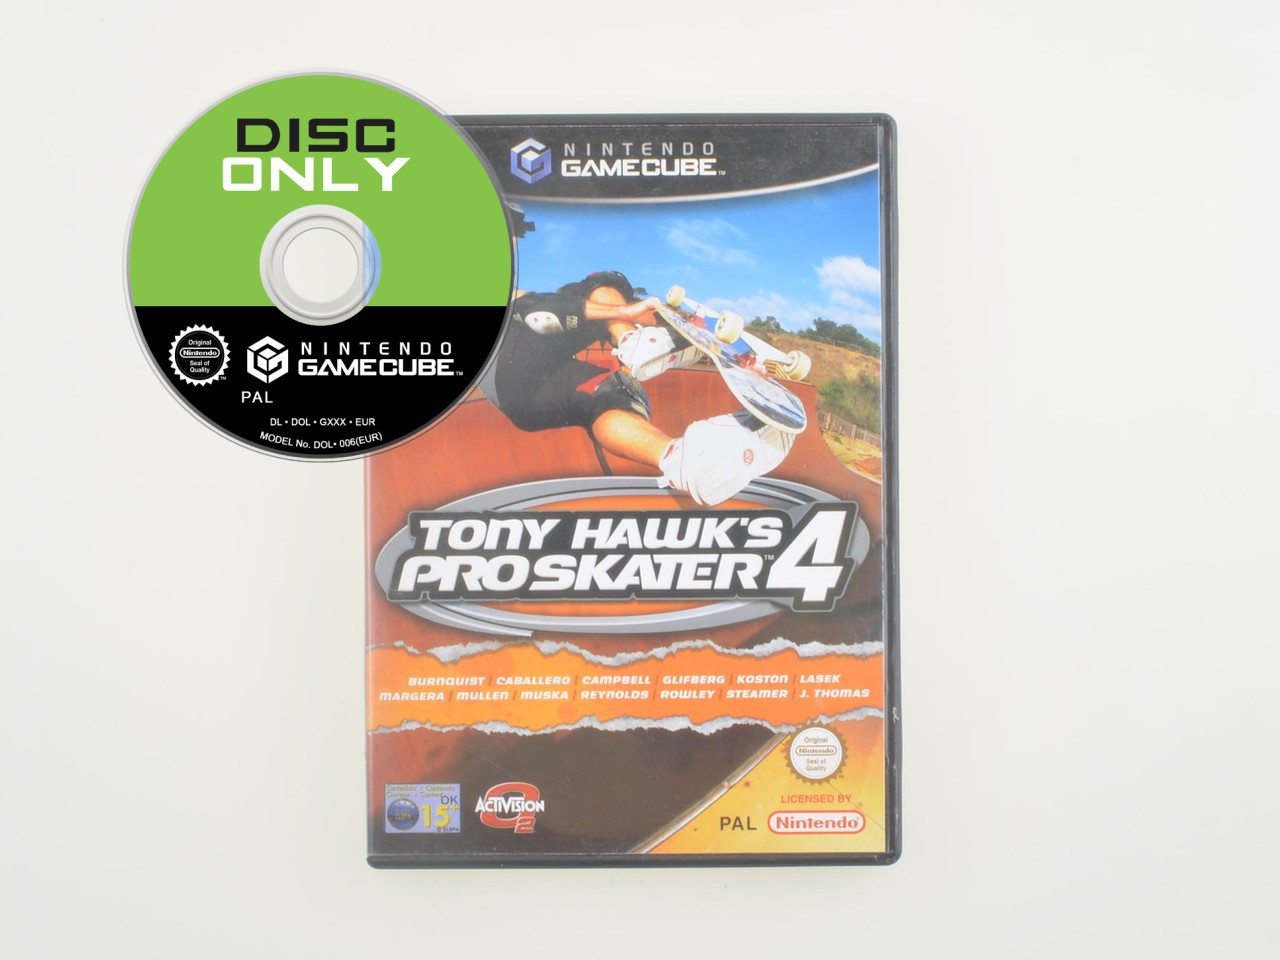 Tony Hawk's Pro Skater 4 - Disc Only Kopen | Gamecube Games